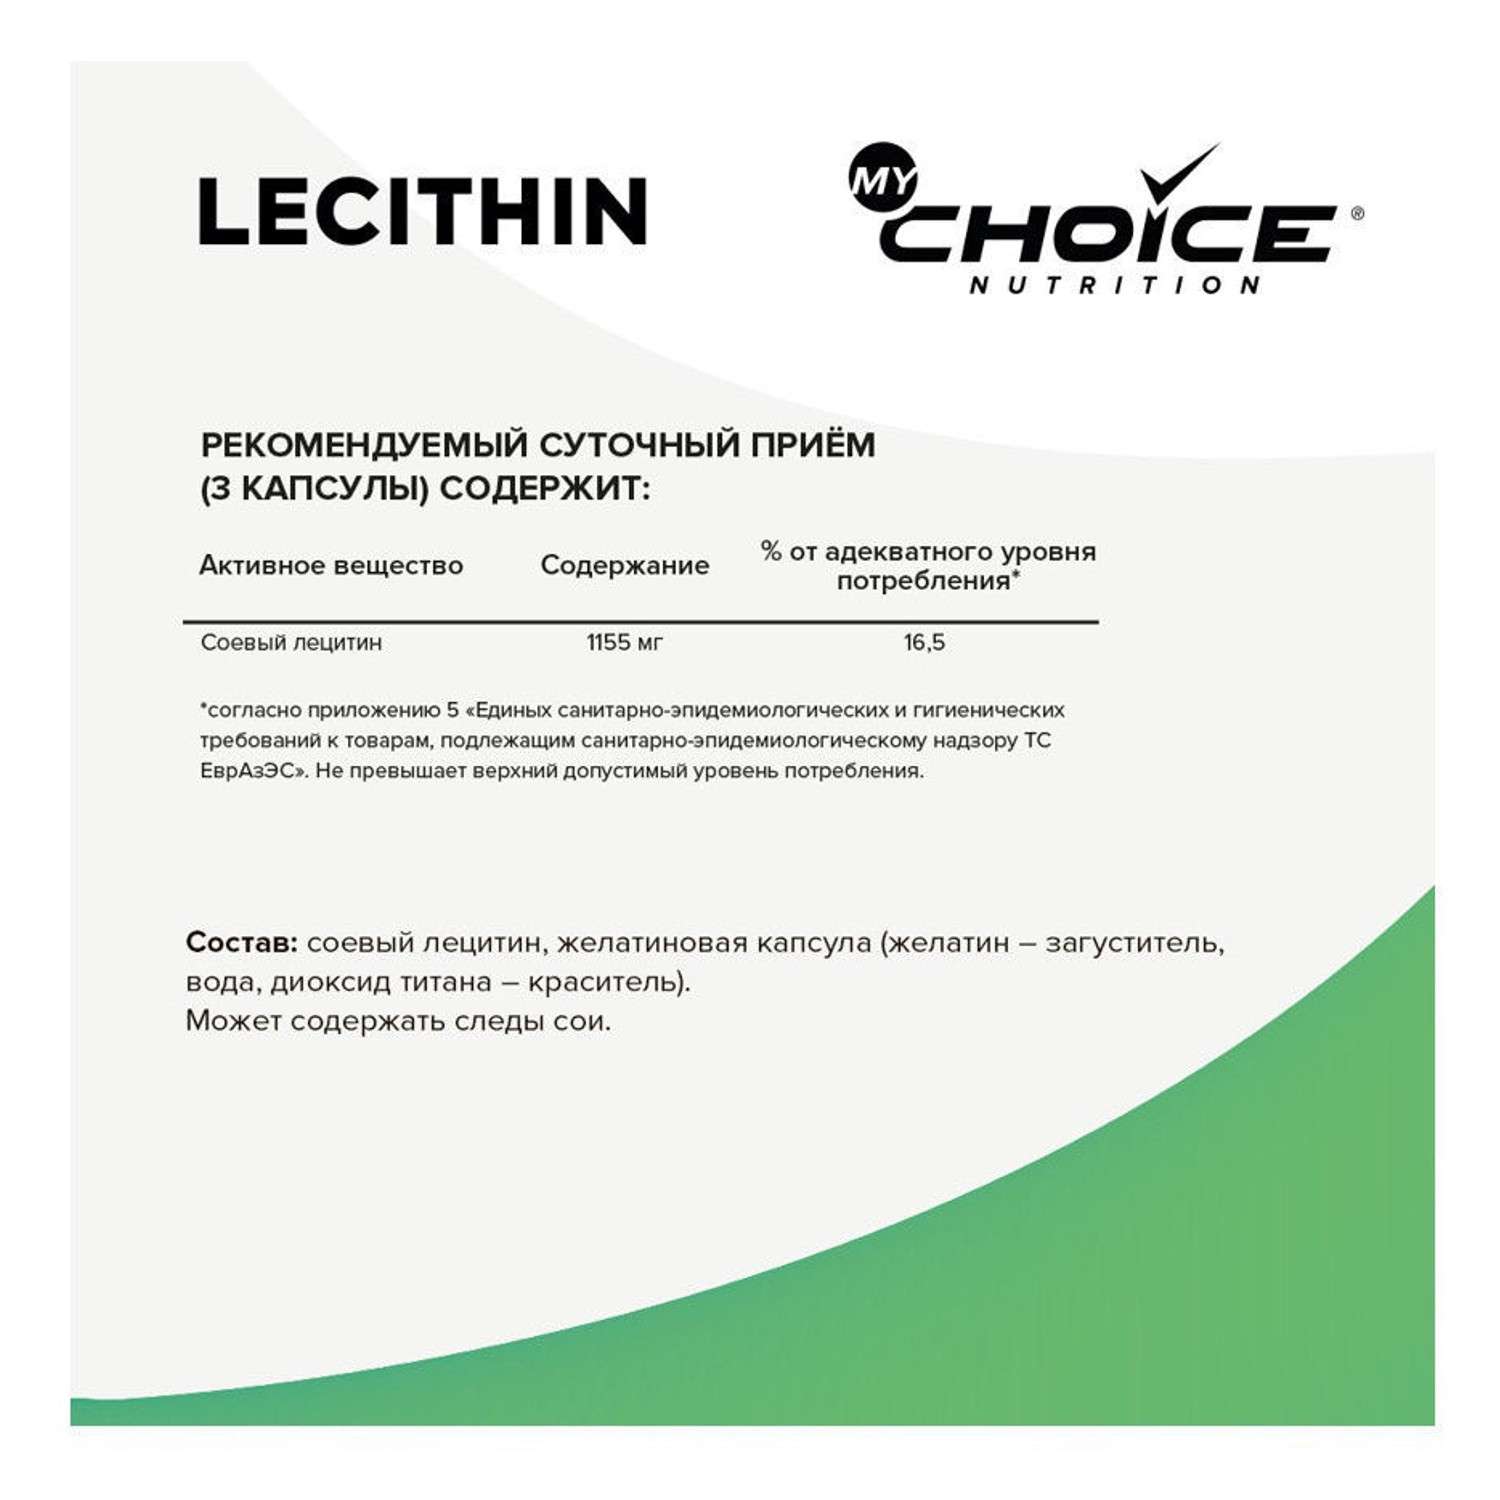 Комплексная пищевая добавка MyChoice Nutrition Лецитин 60капсул - фото 2